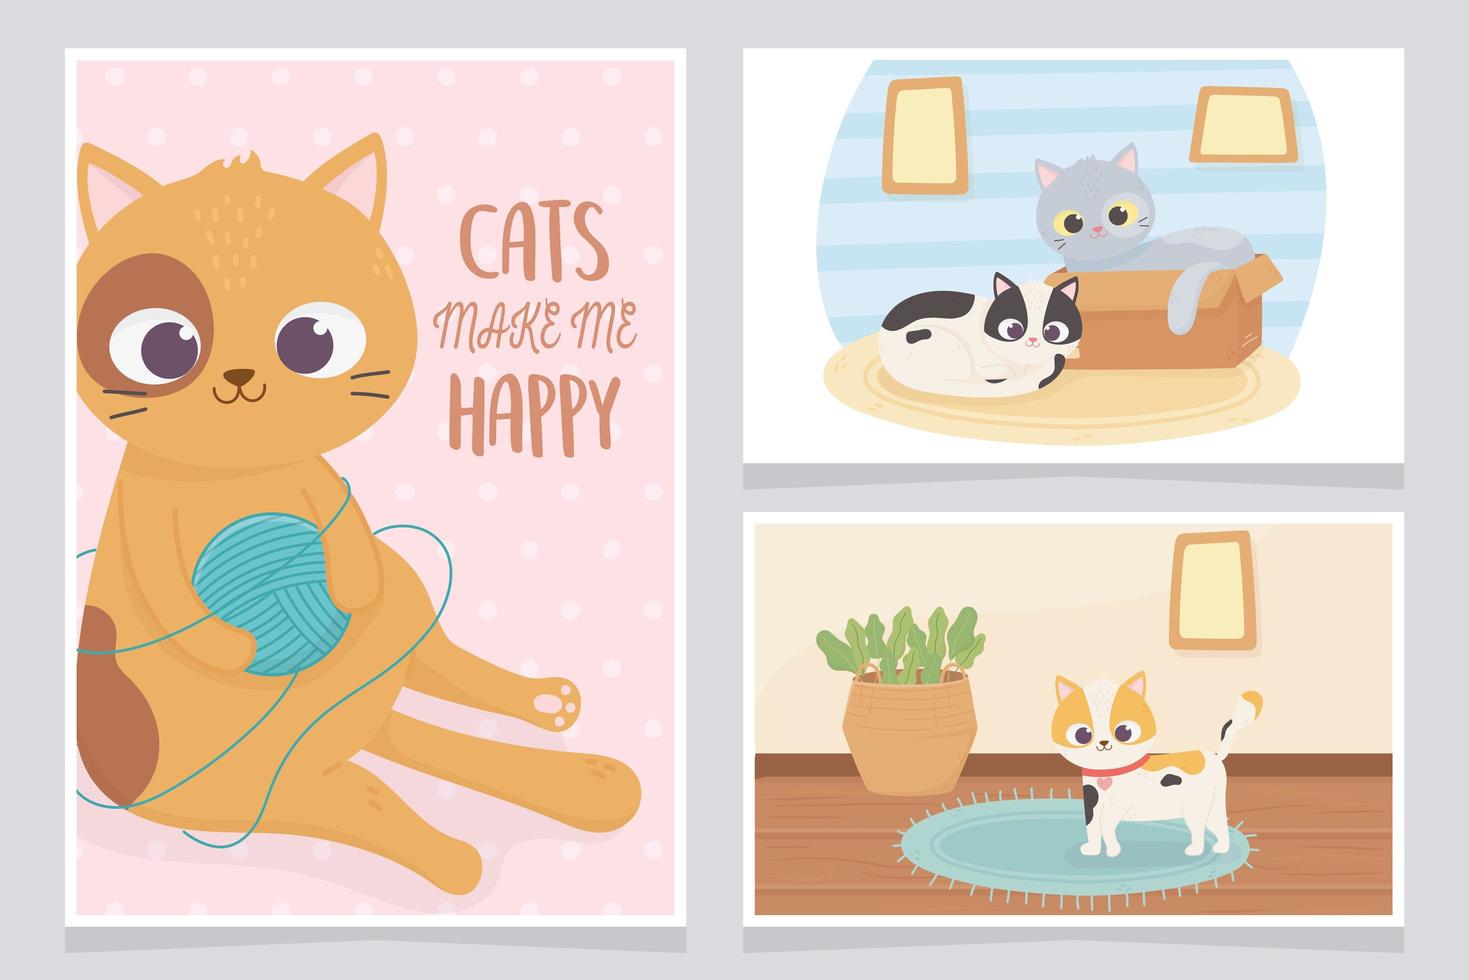 pet cats make me happy with wool ball box room carpet cartoon vector